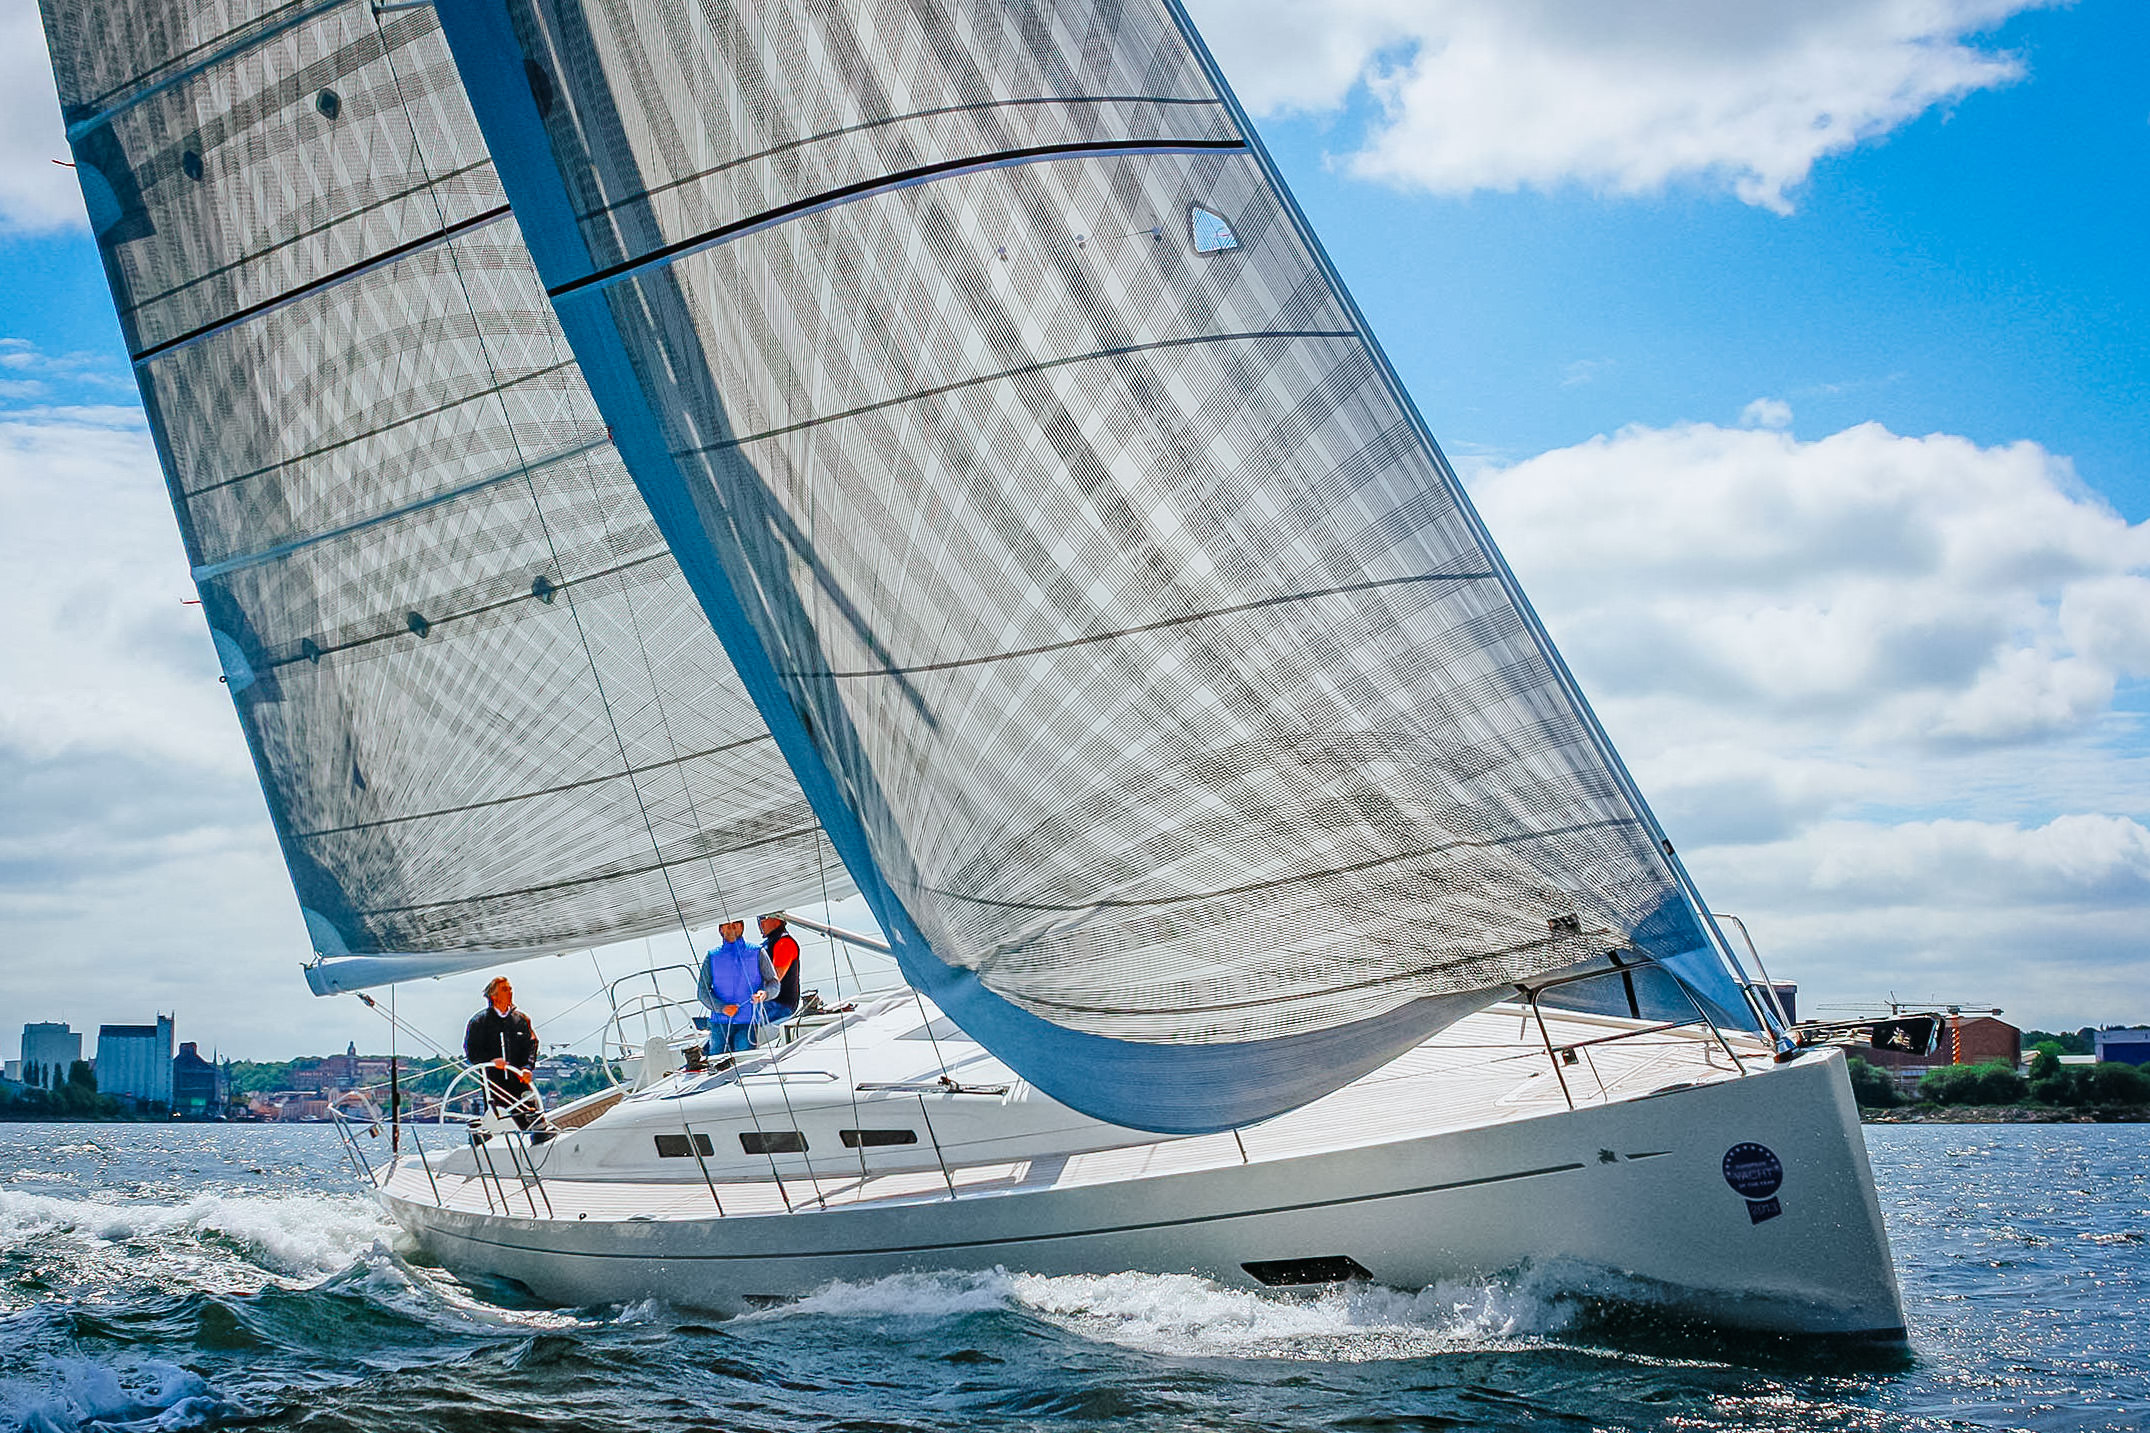 Italia 13.98 with X-Drive® Carbon cruising sails